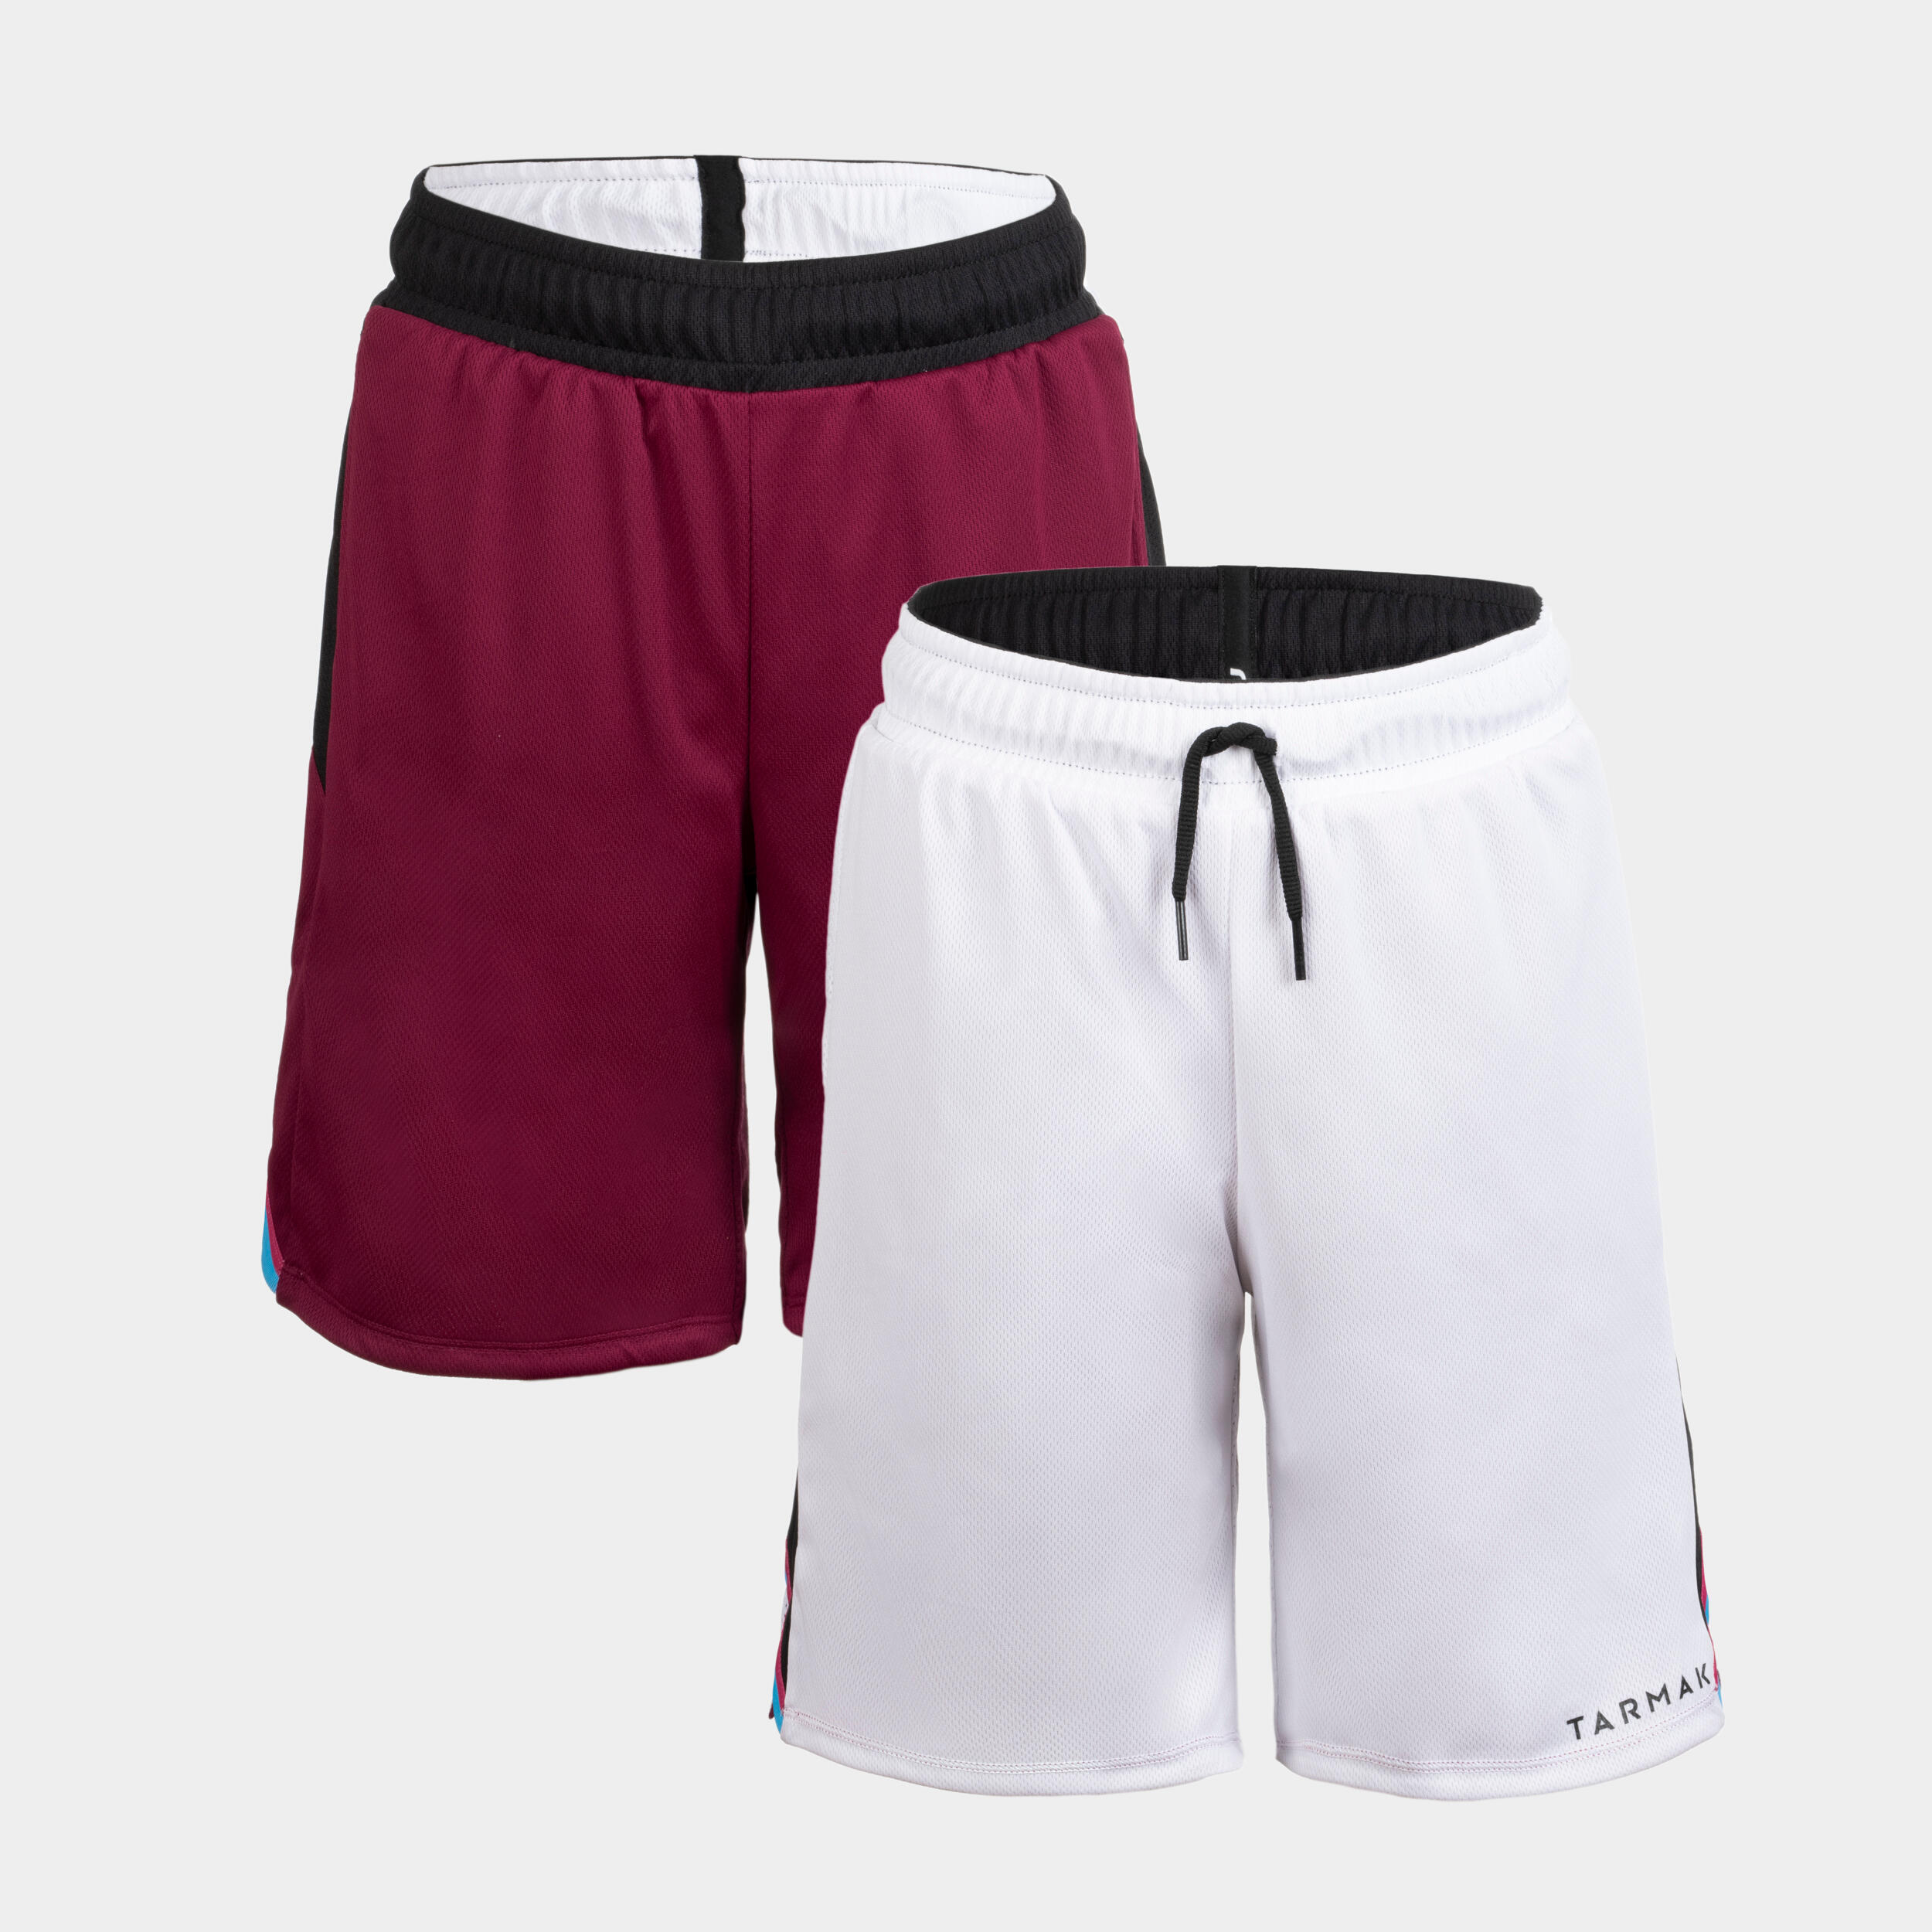 TARMAK Kids' Reversible Basketball Shorts SH500R - Burgundy/White